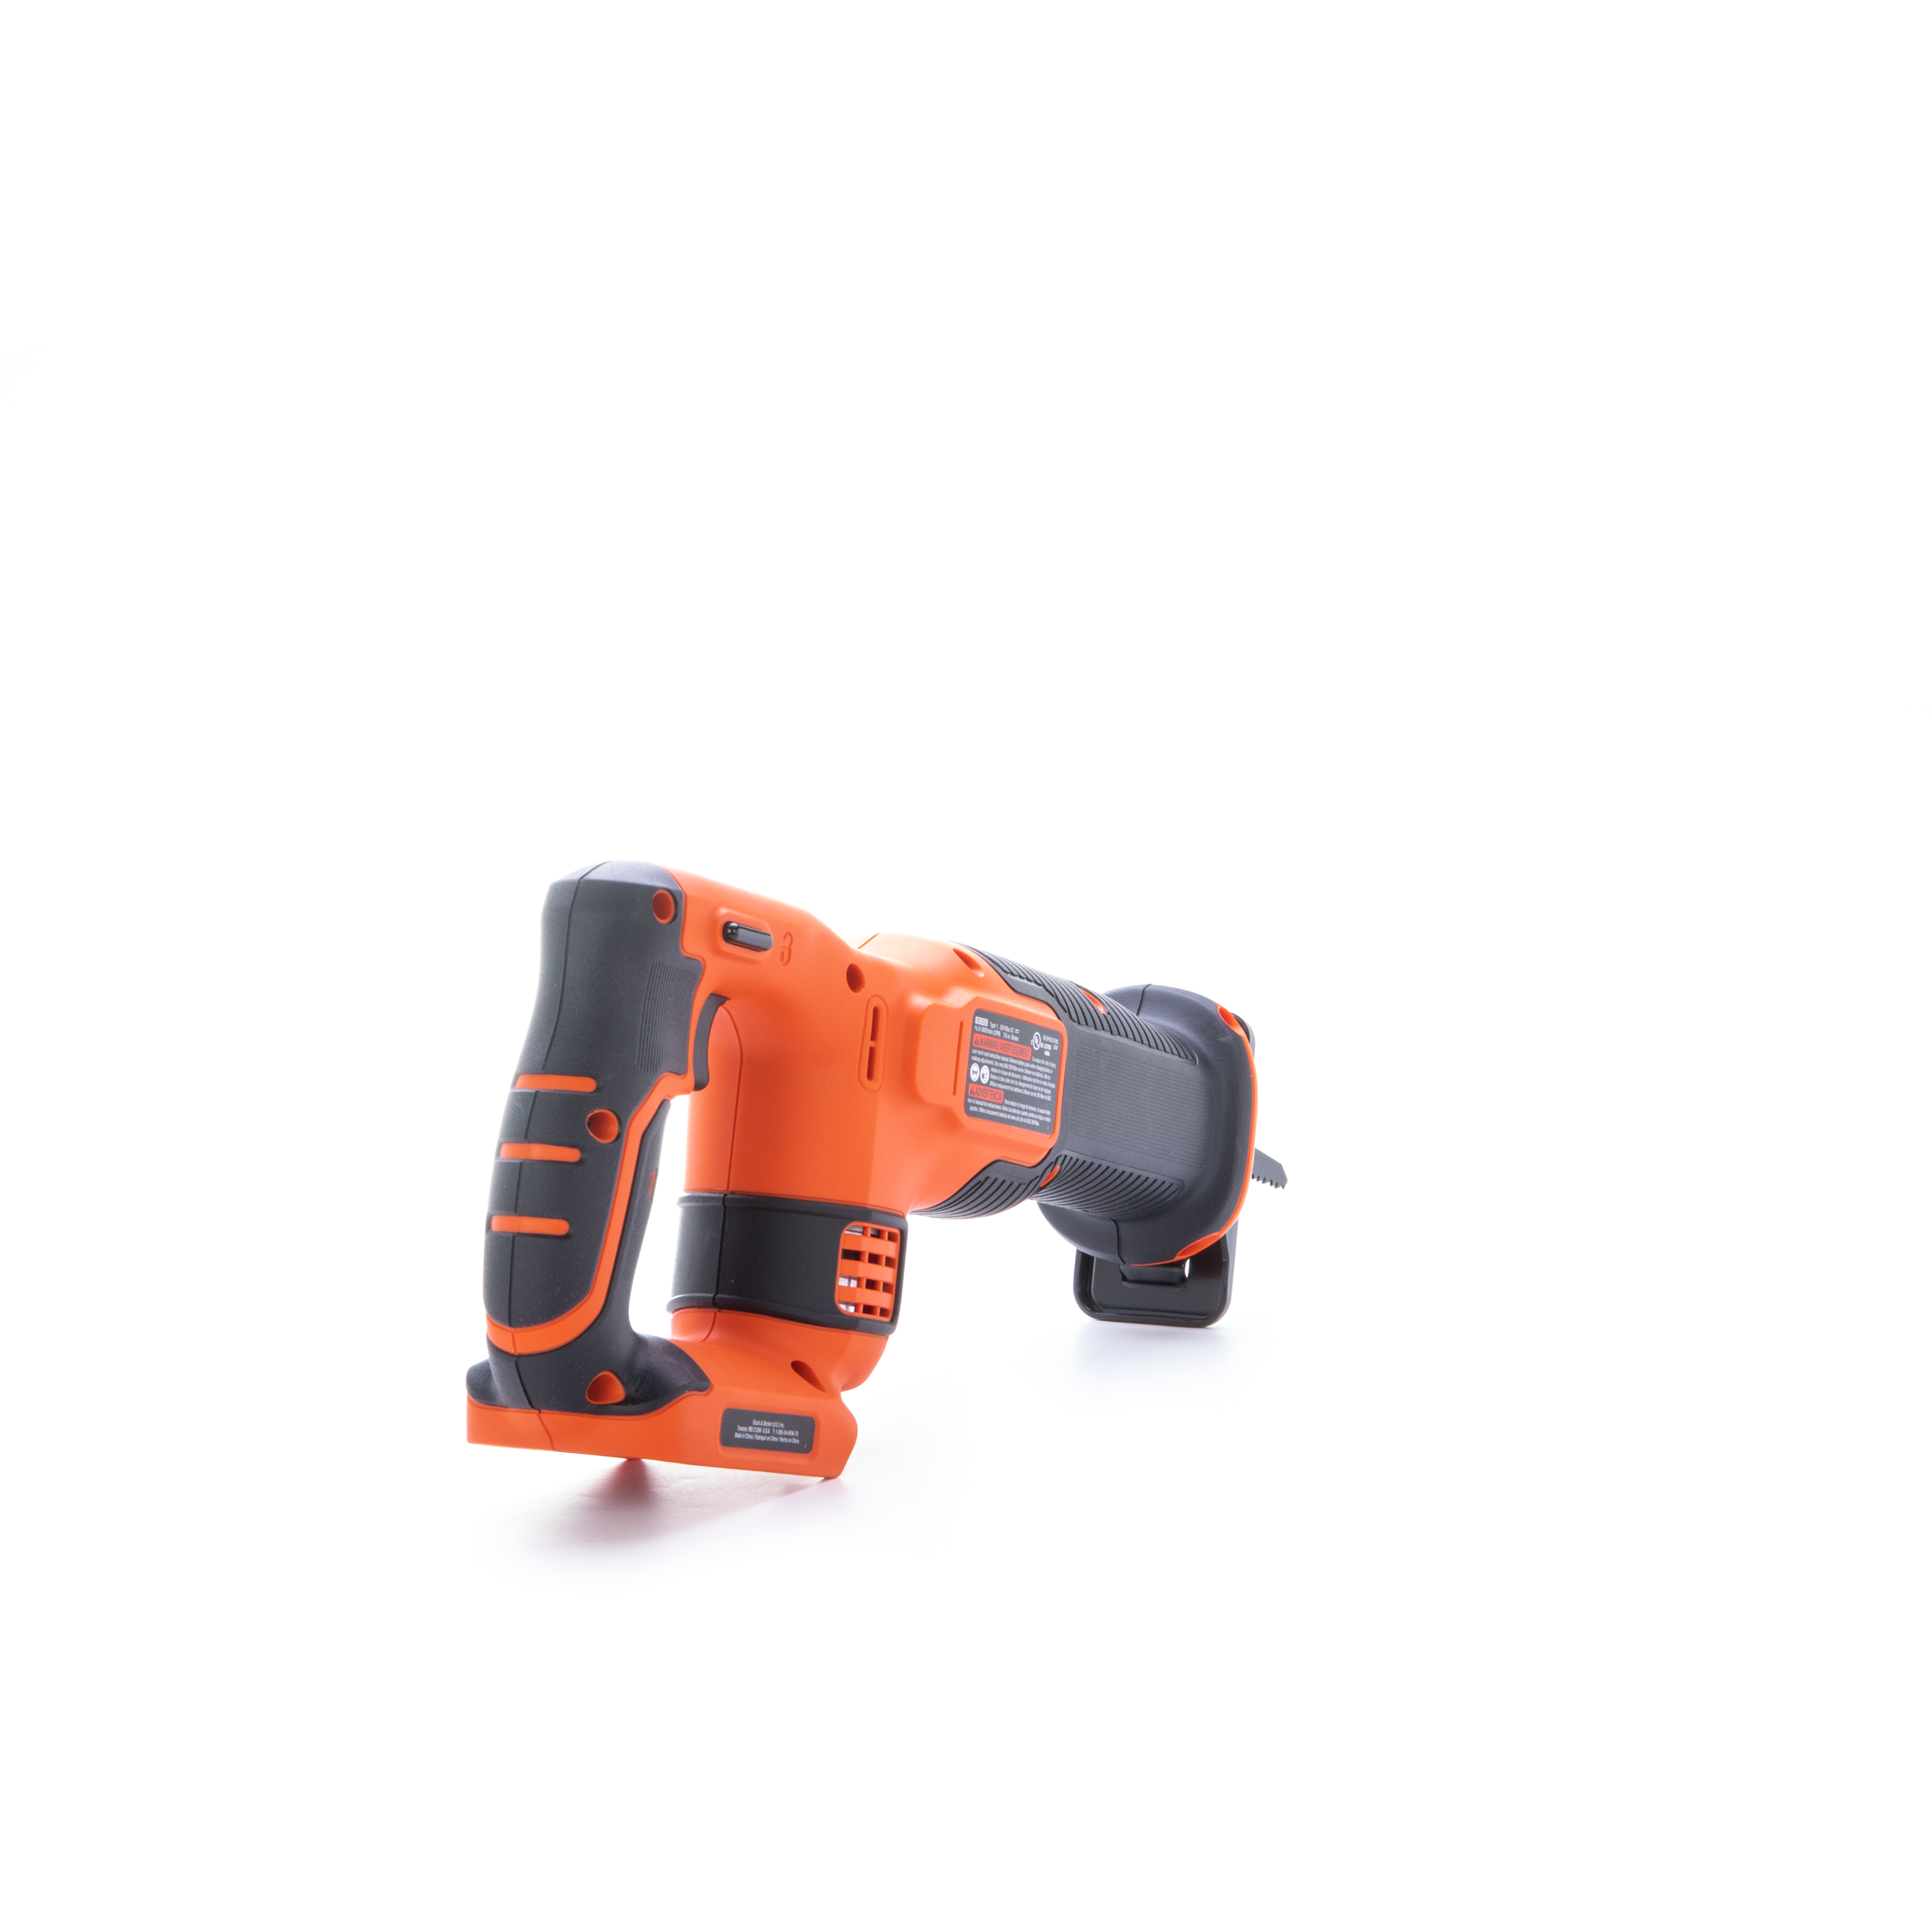 20V MAX* Cordless Reciprocating Saw Kit | BLACK+DECKER